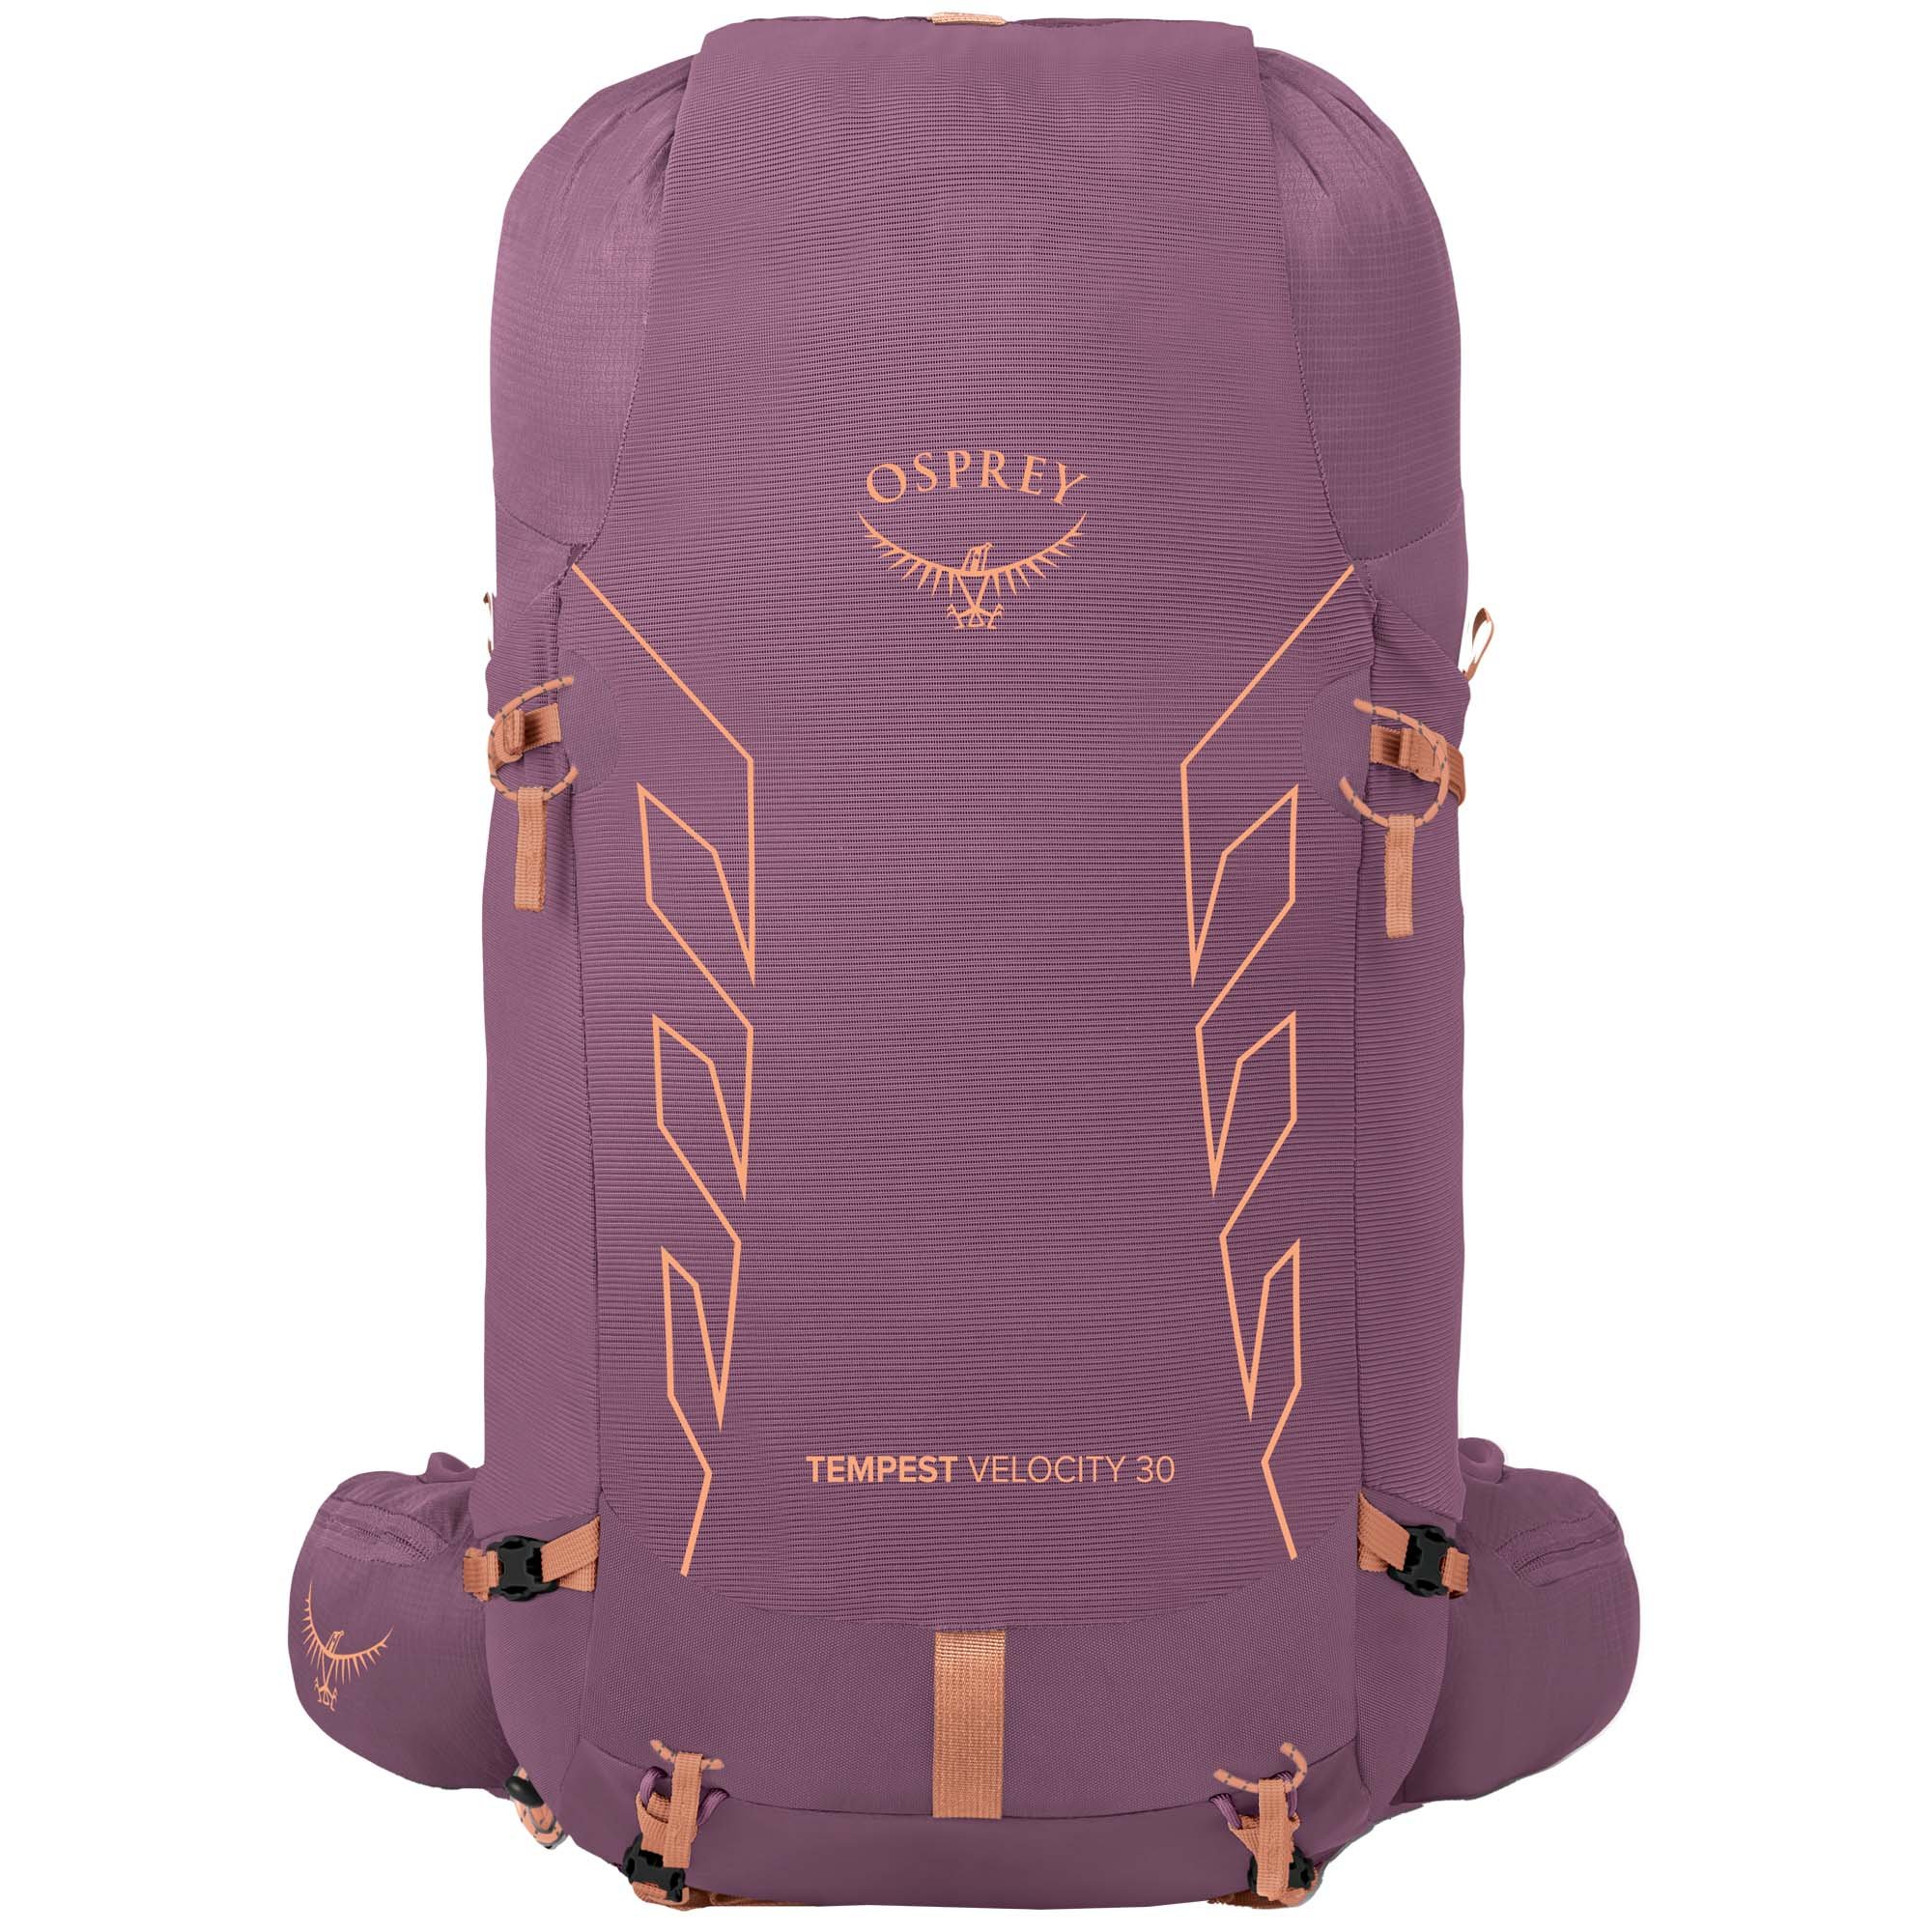 Osprey Tempest Velocity 30 Women's Technical Backpack